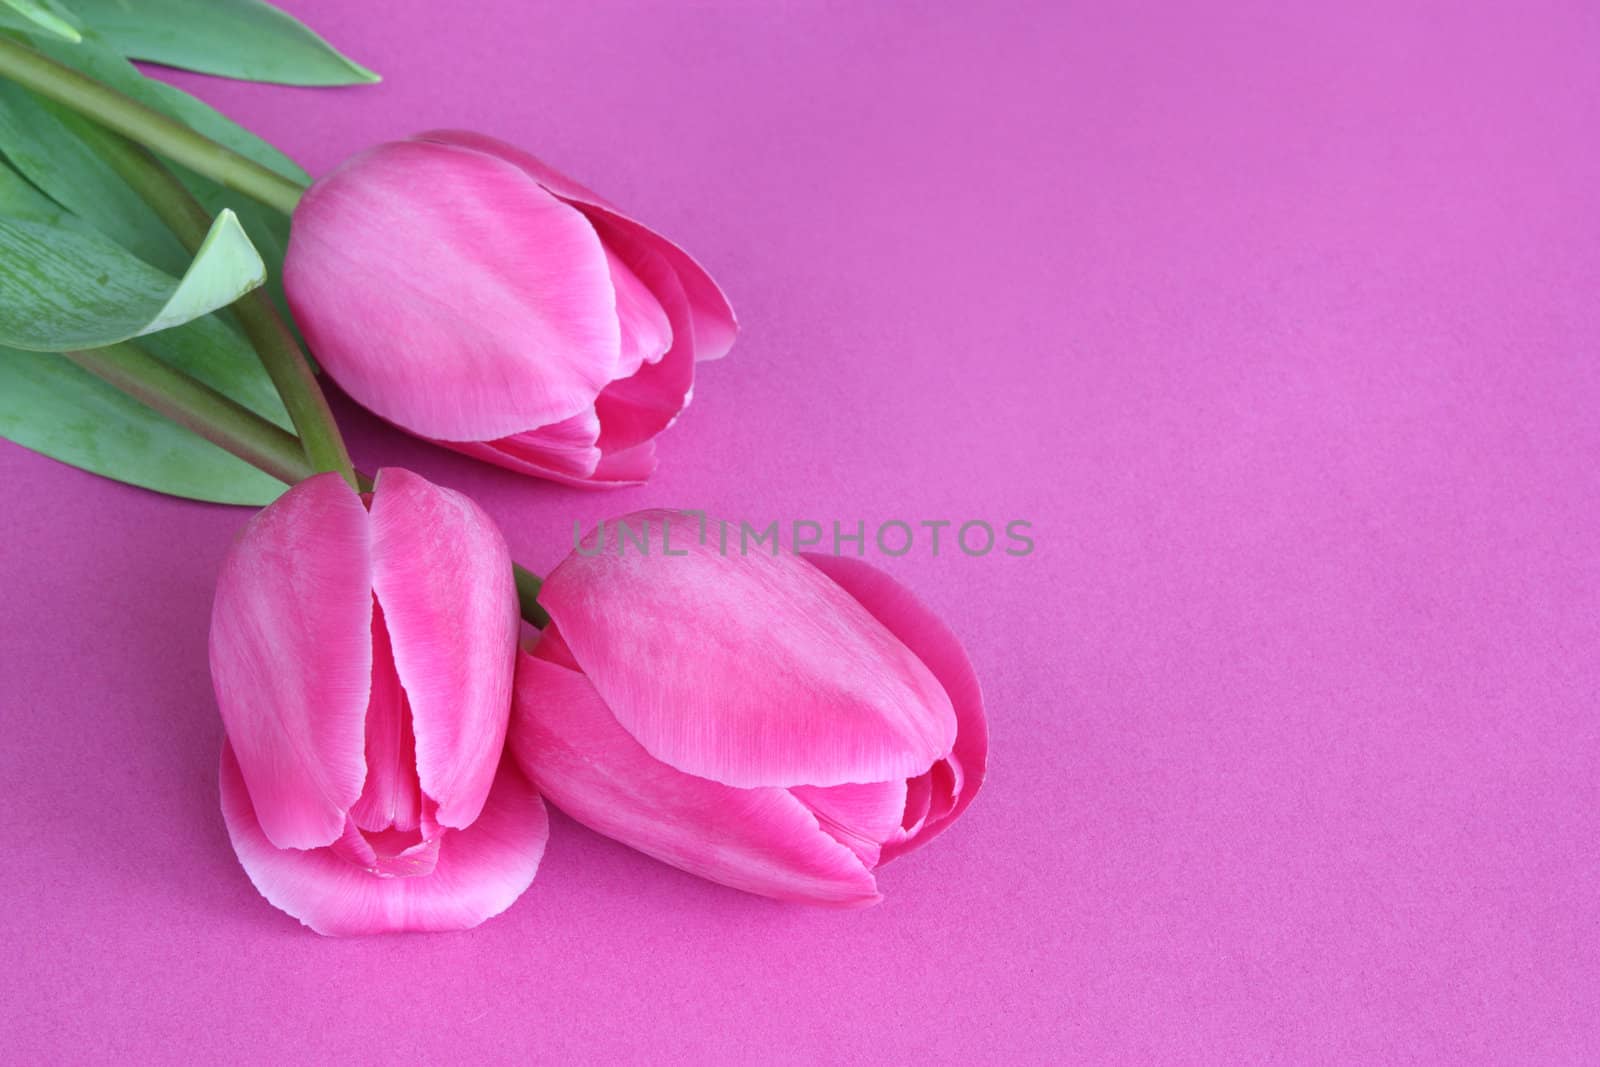 Pink tulips on purple surface